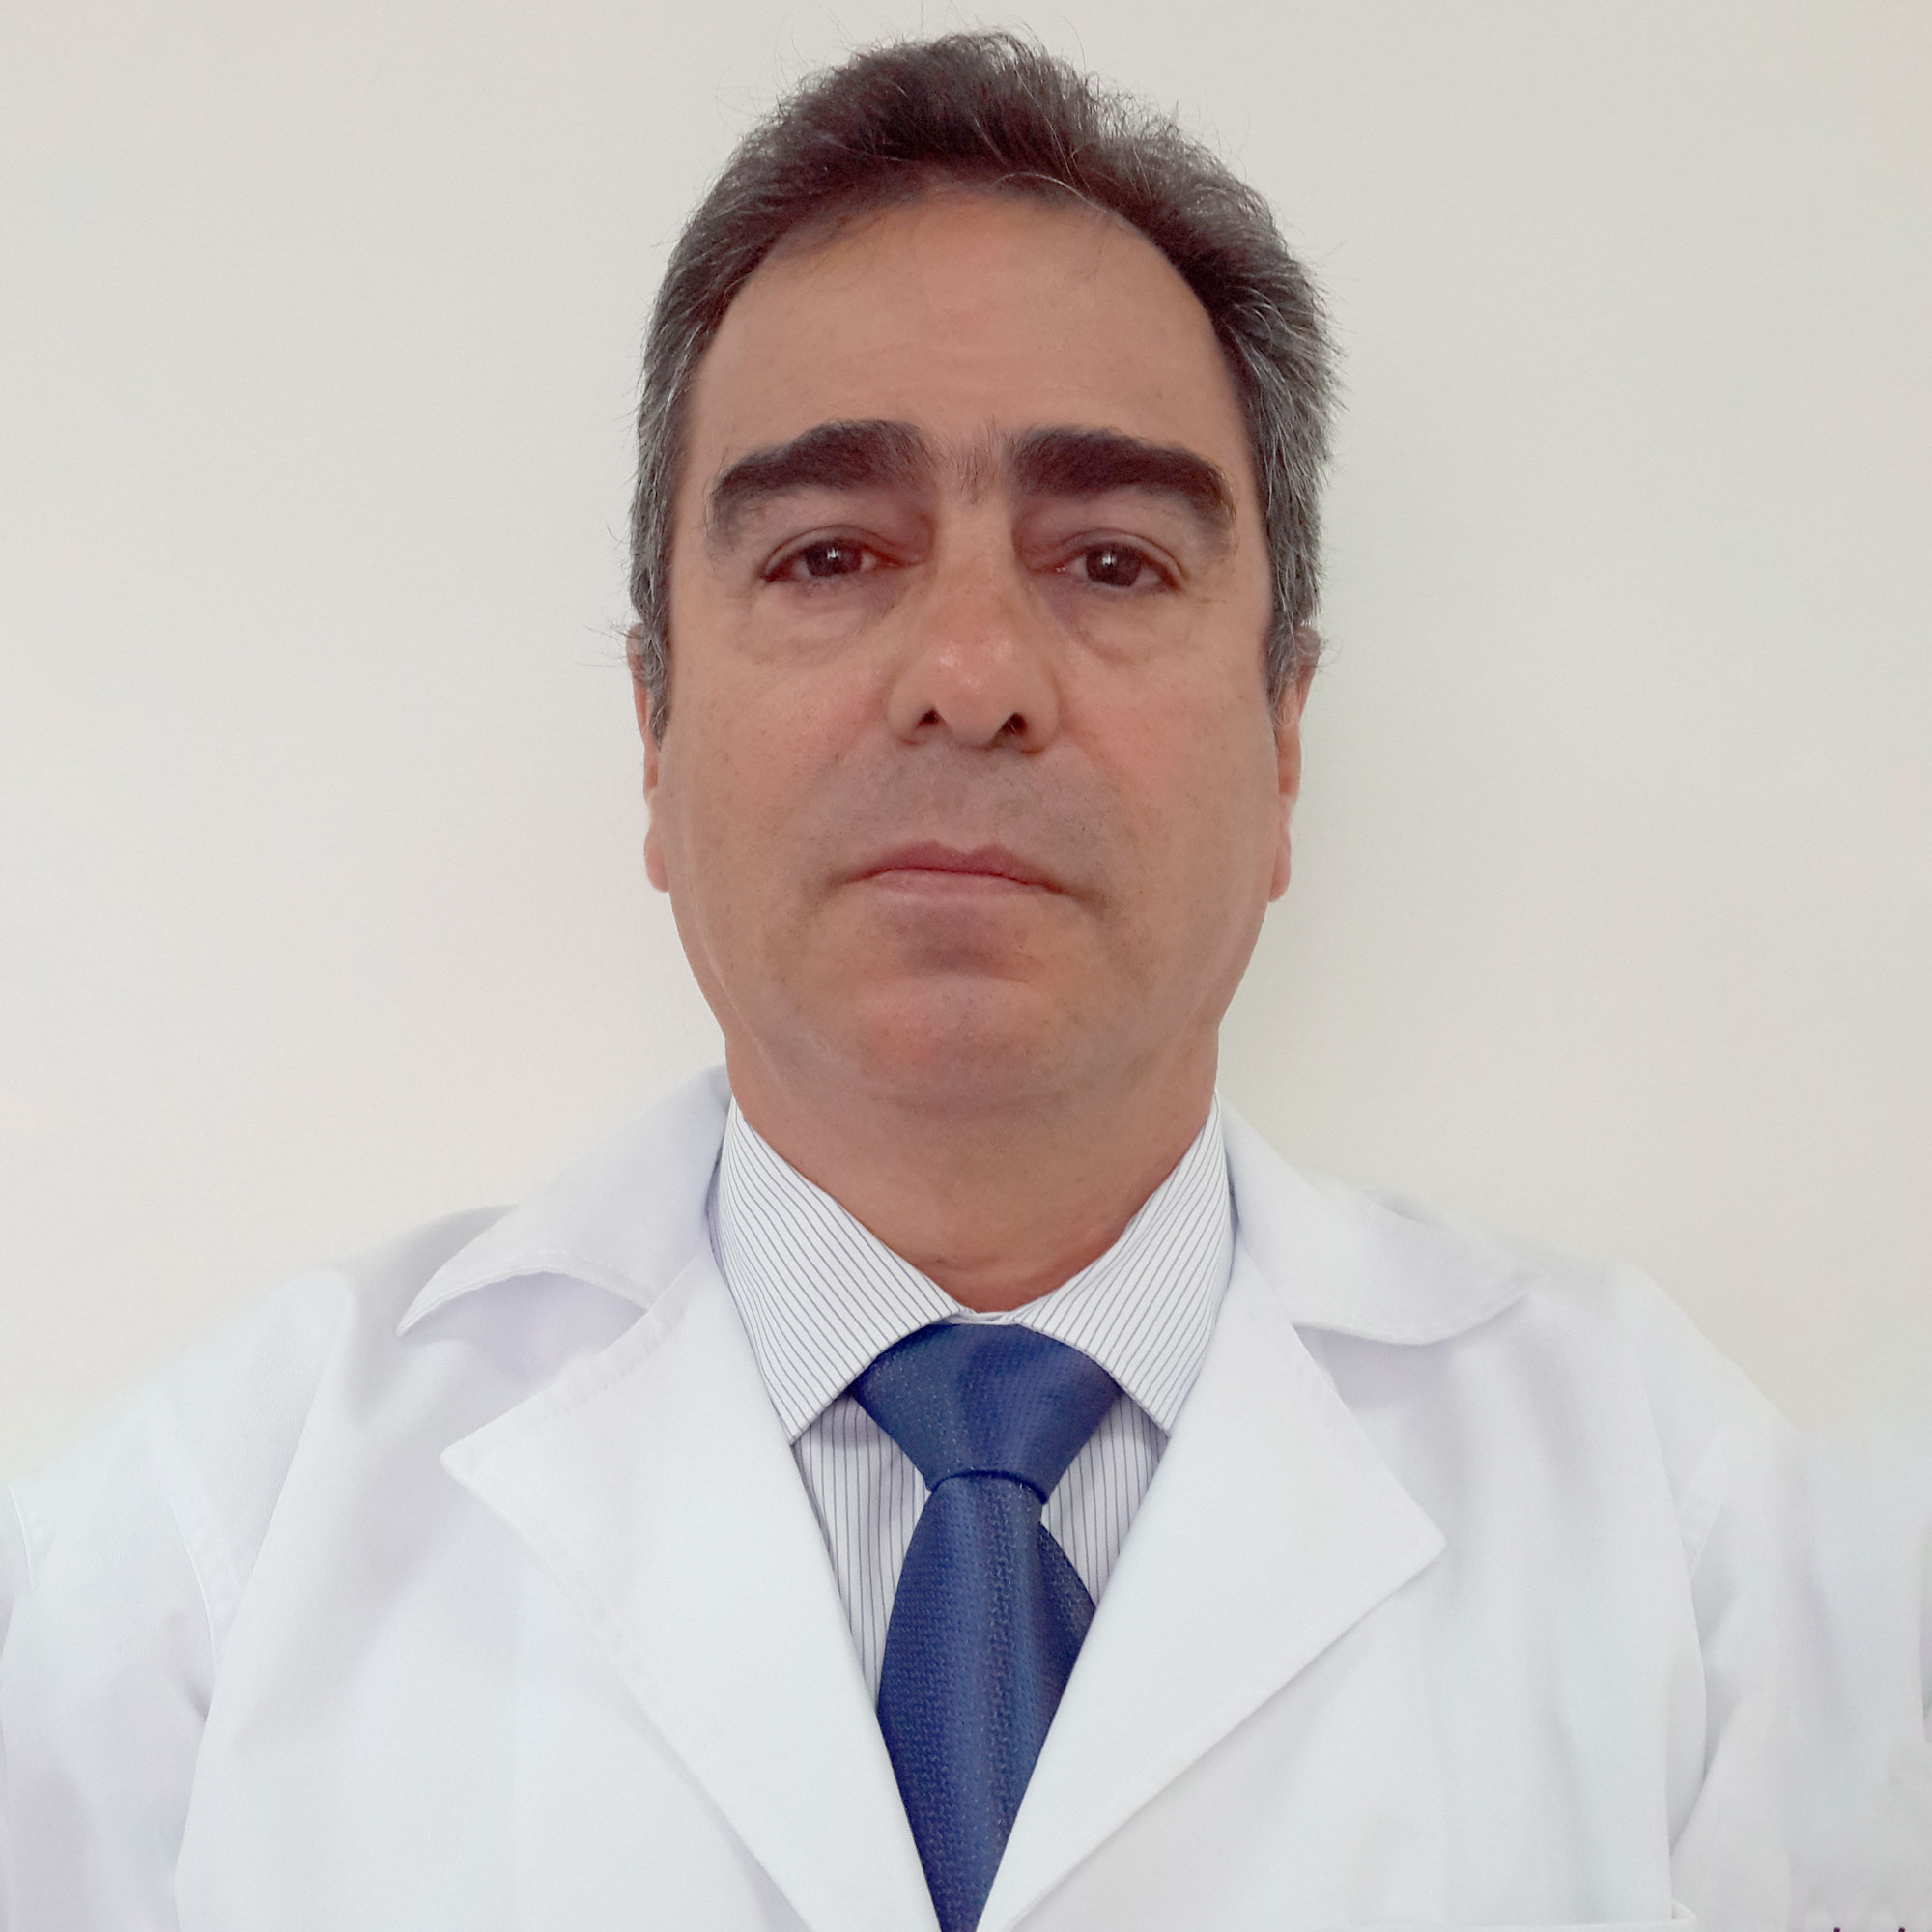 Dr. Alexander Jaramillo Canelos